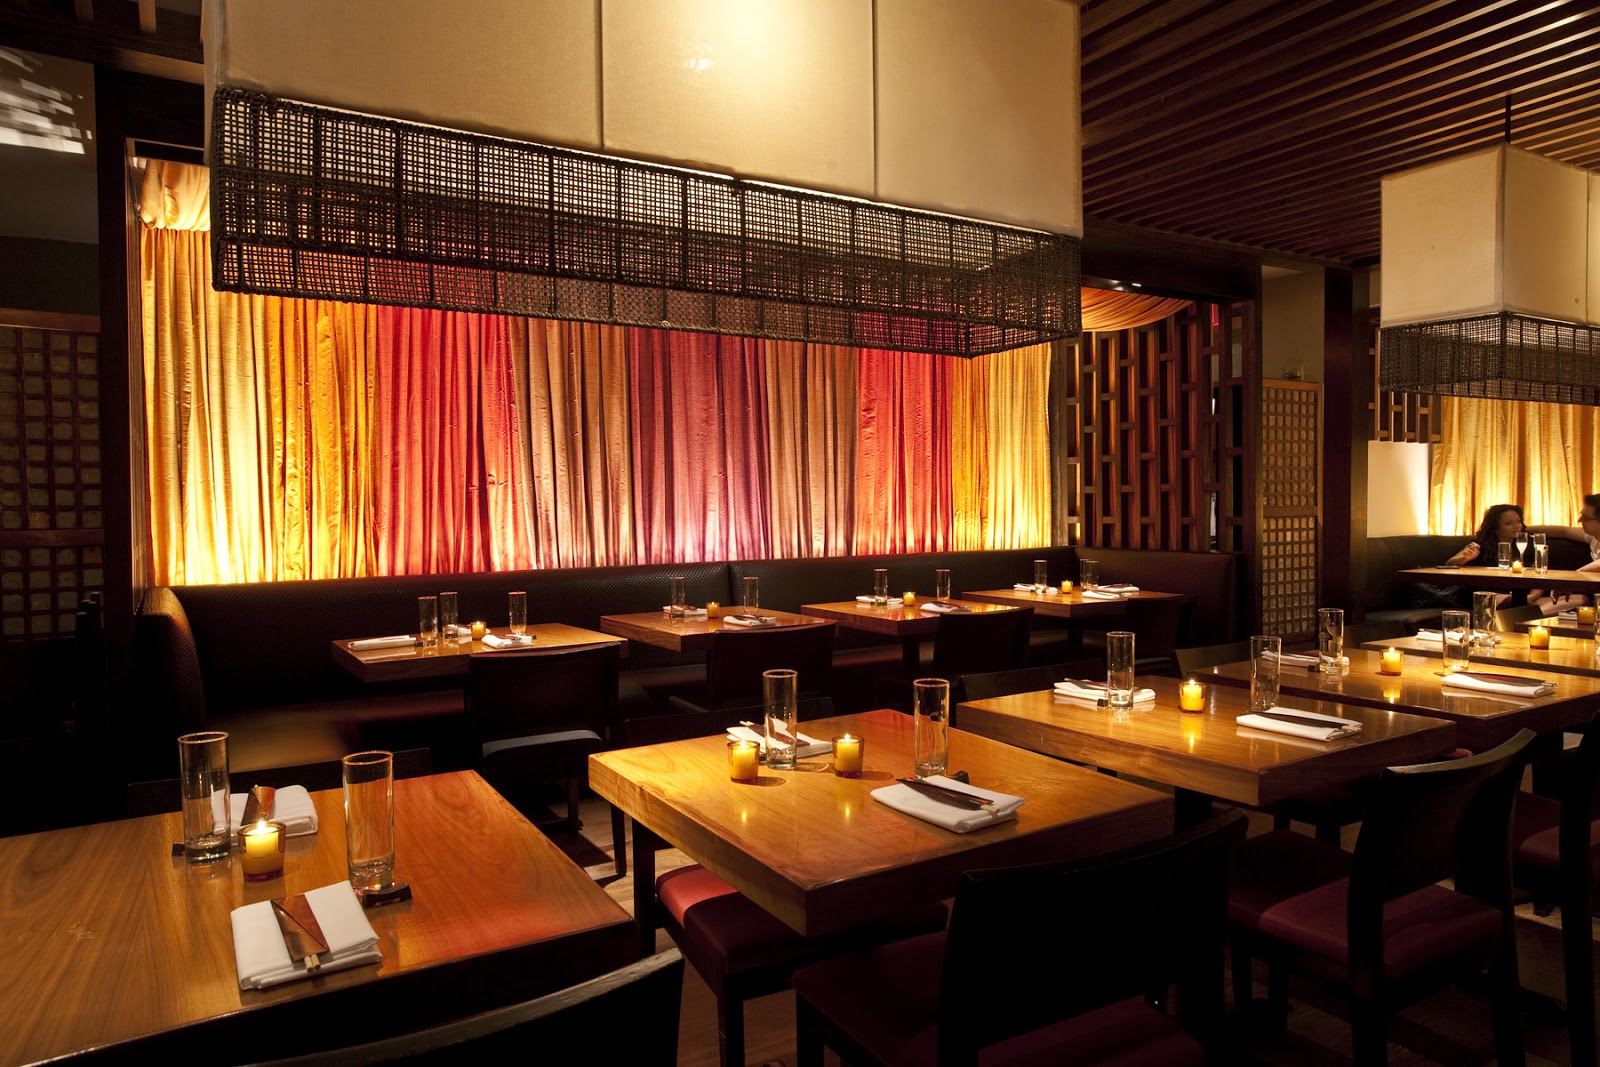 Photo of Kittichai in New York City, New York, United States - 1 Picture of Restaurant, Food, Point of interest, Establishment, Bar